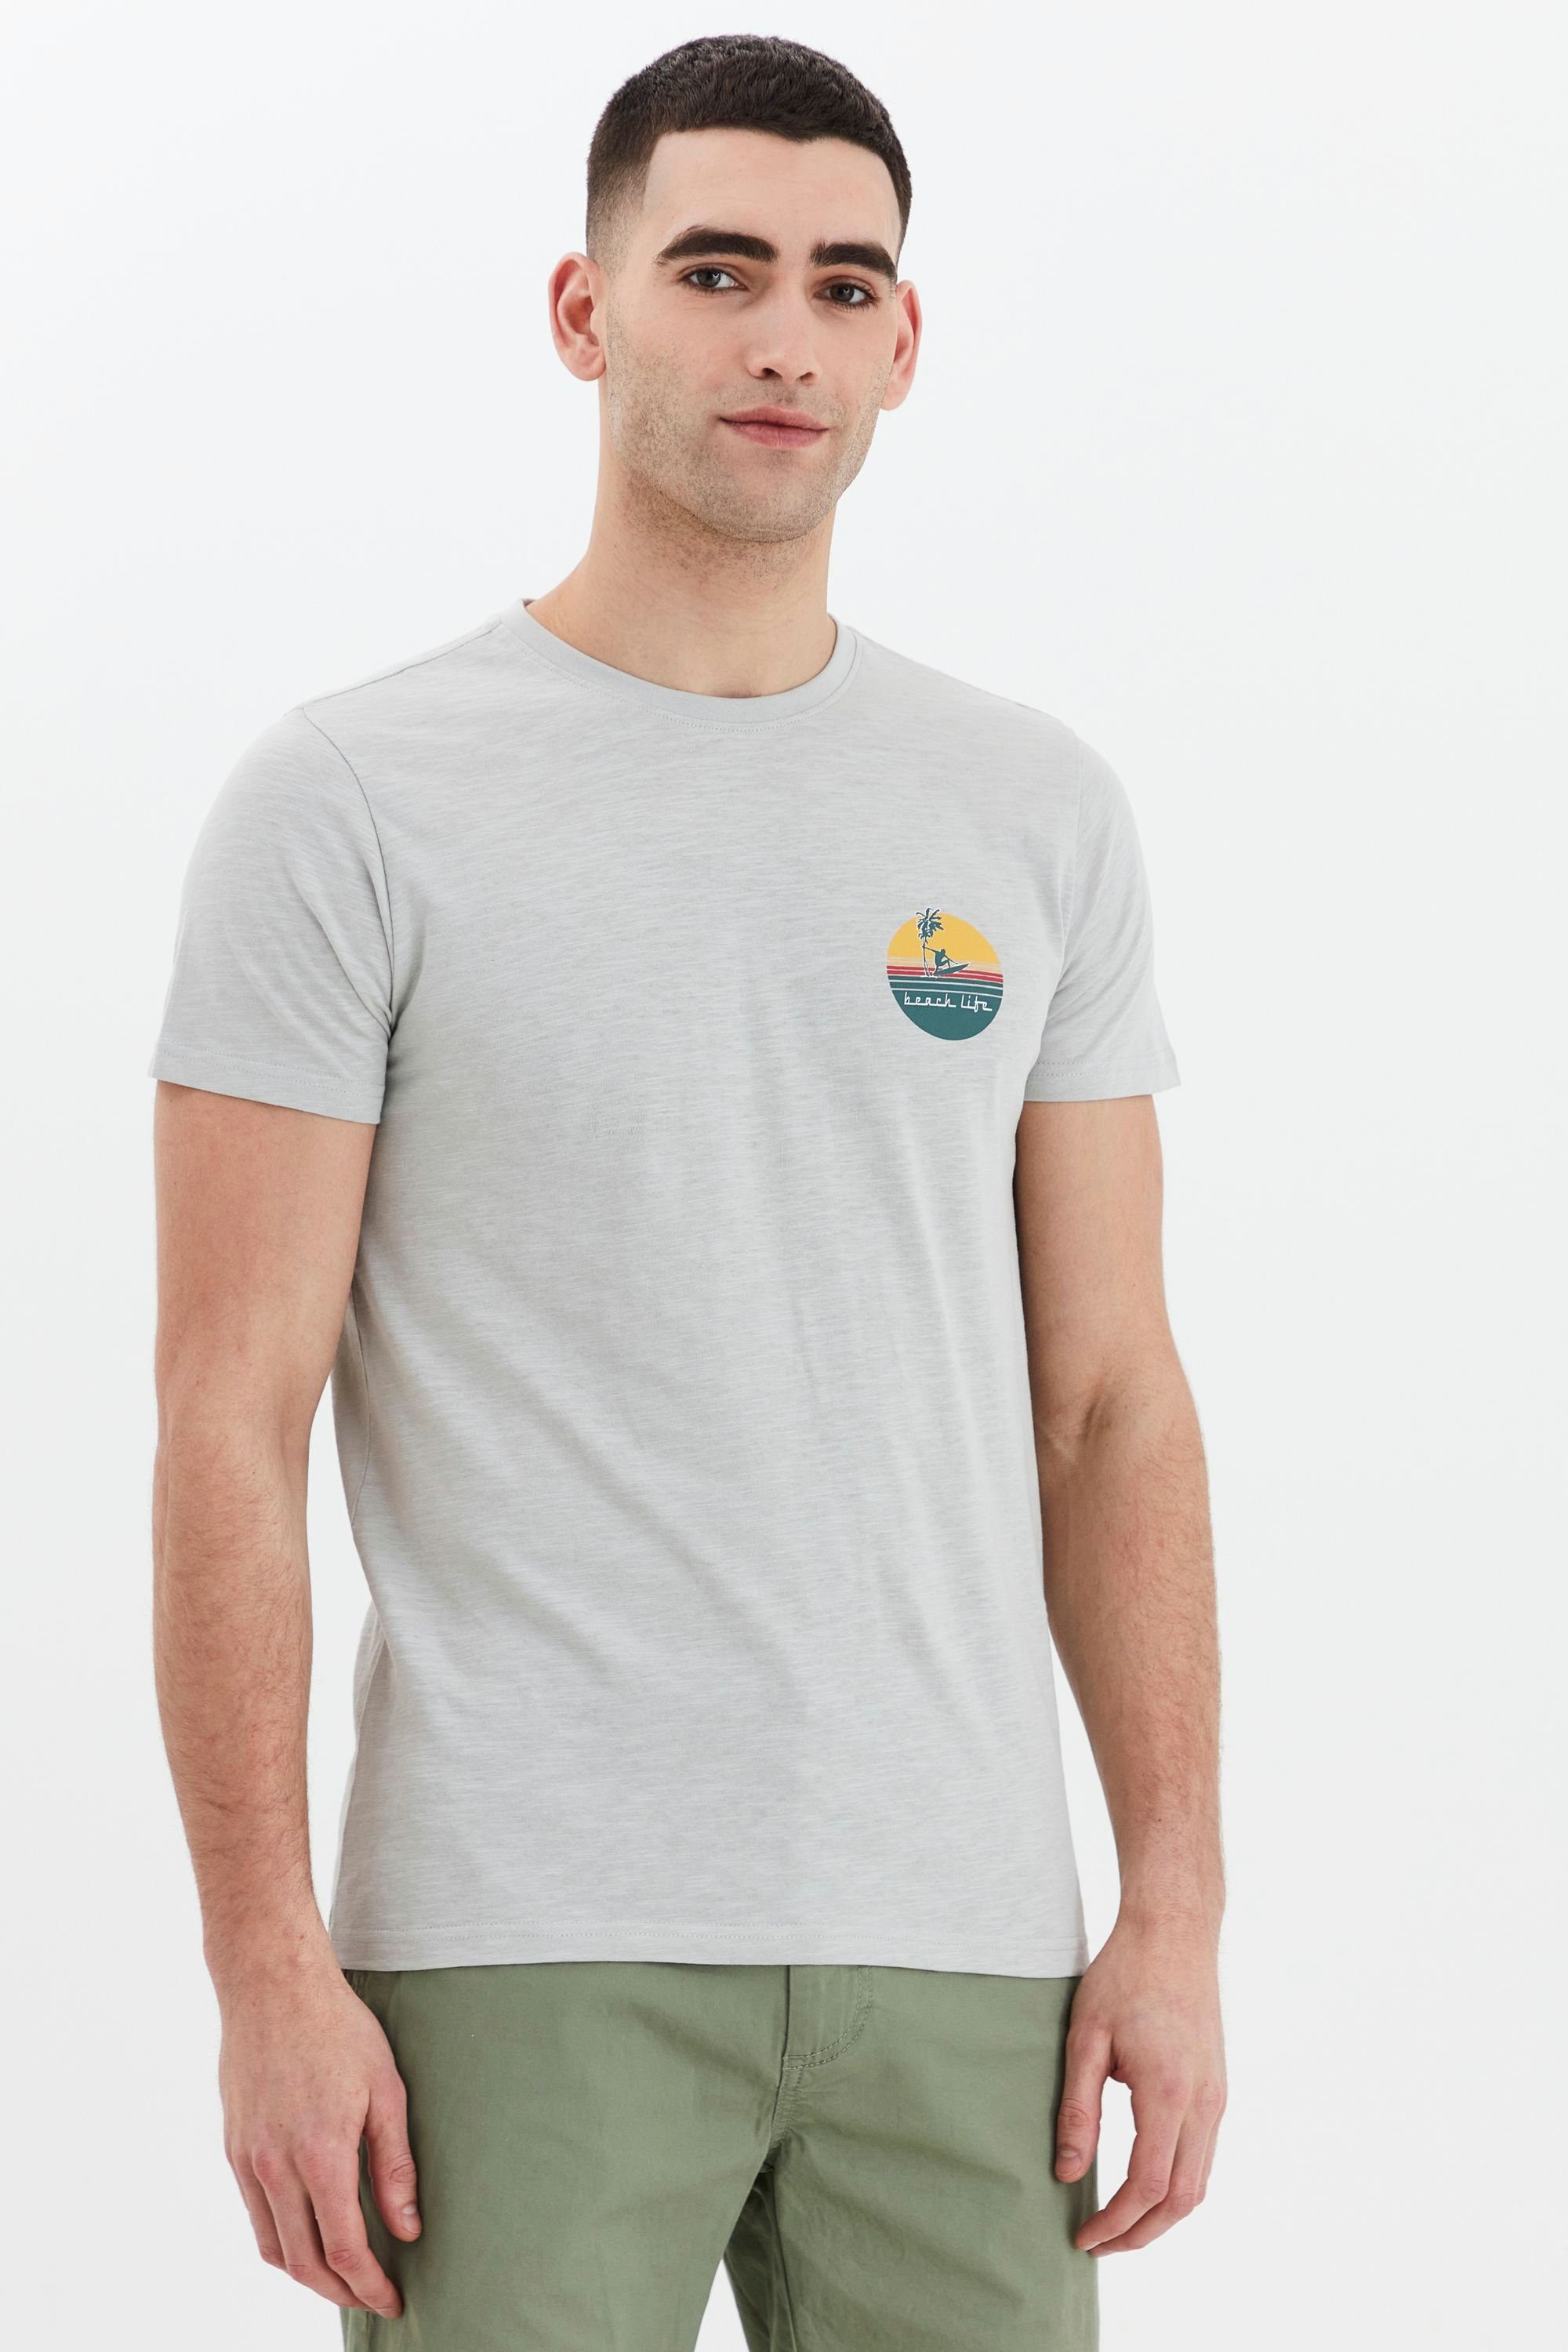 Print (154101) T-Shirt Grey mit !Solid Print-Shirt Light SDEmmo